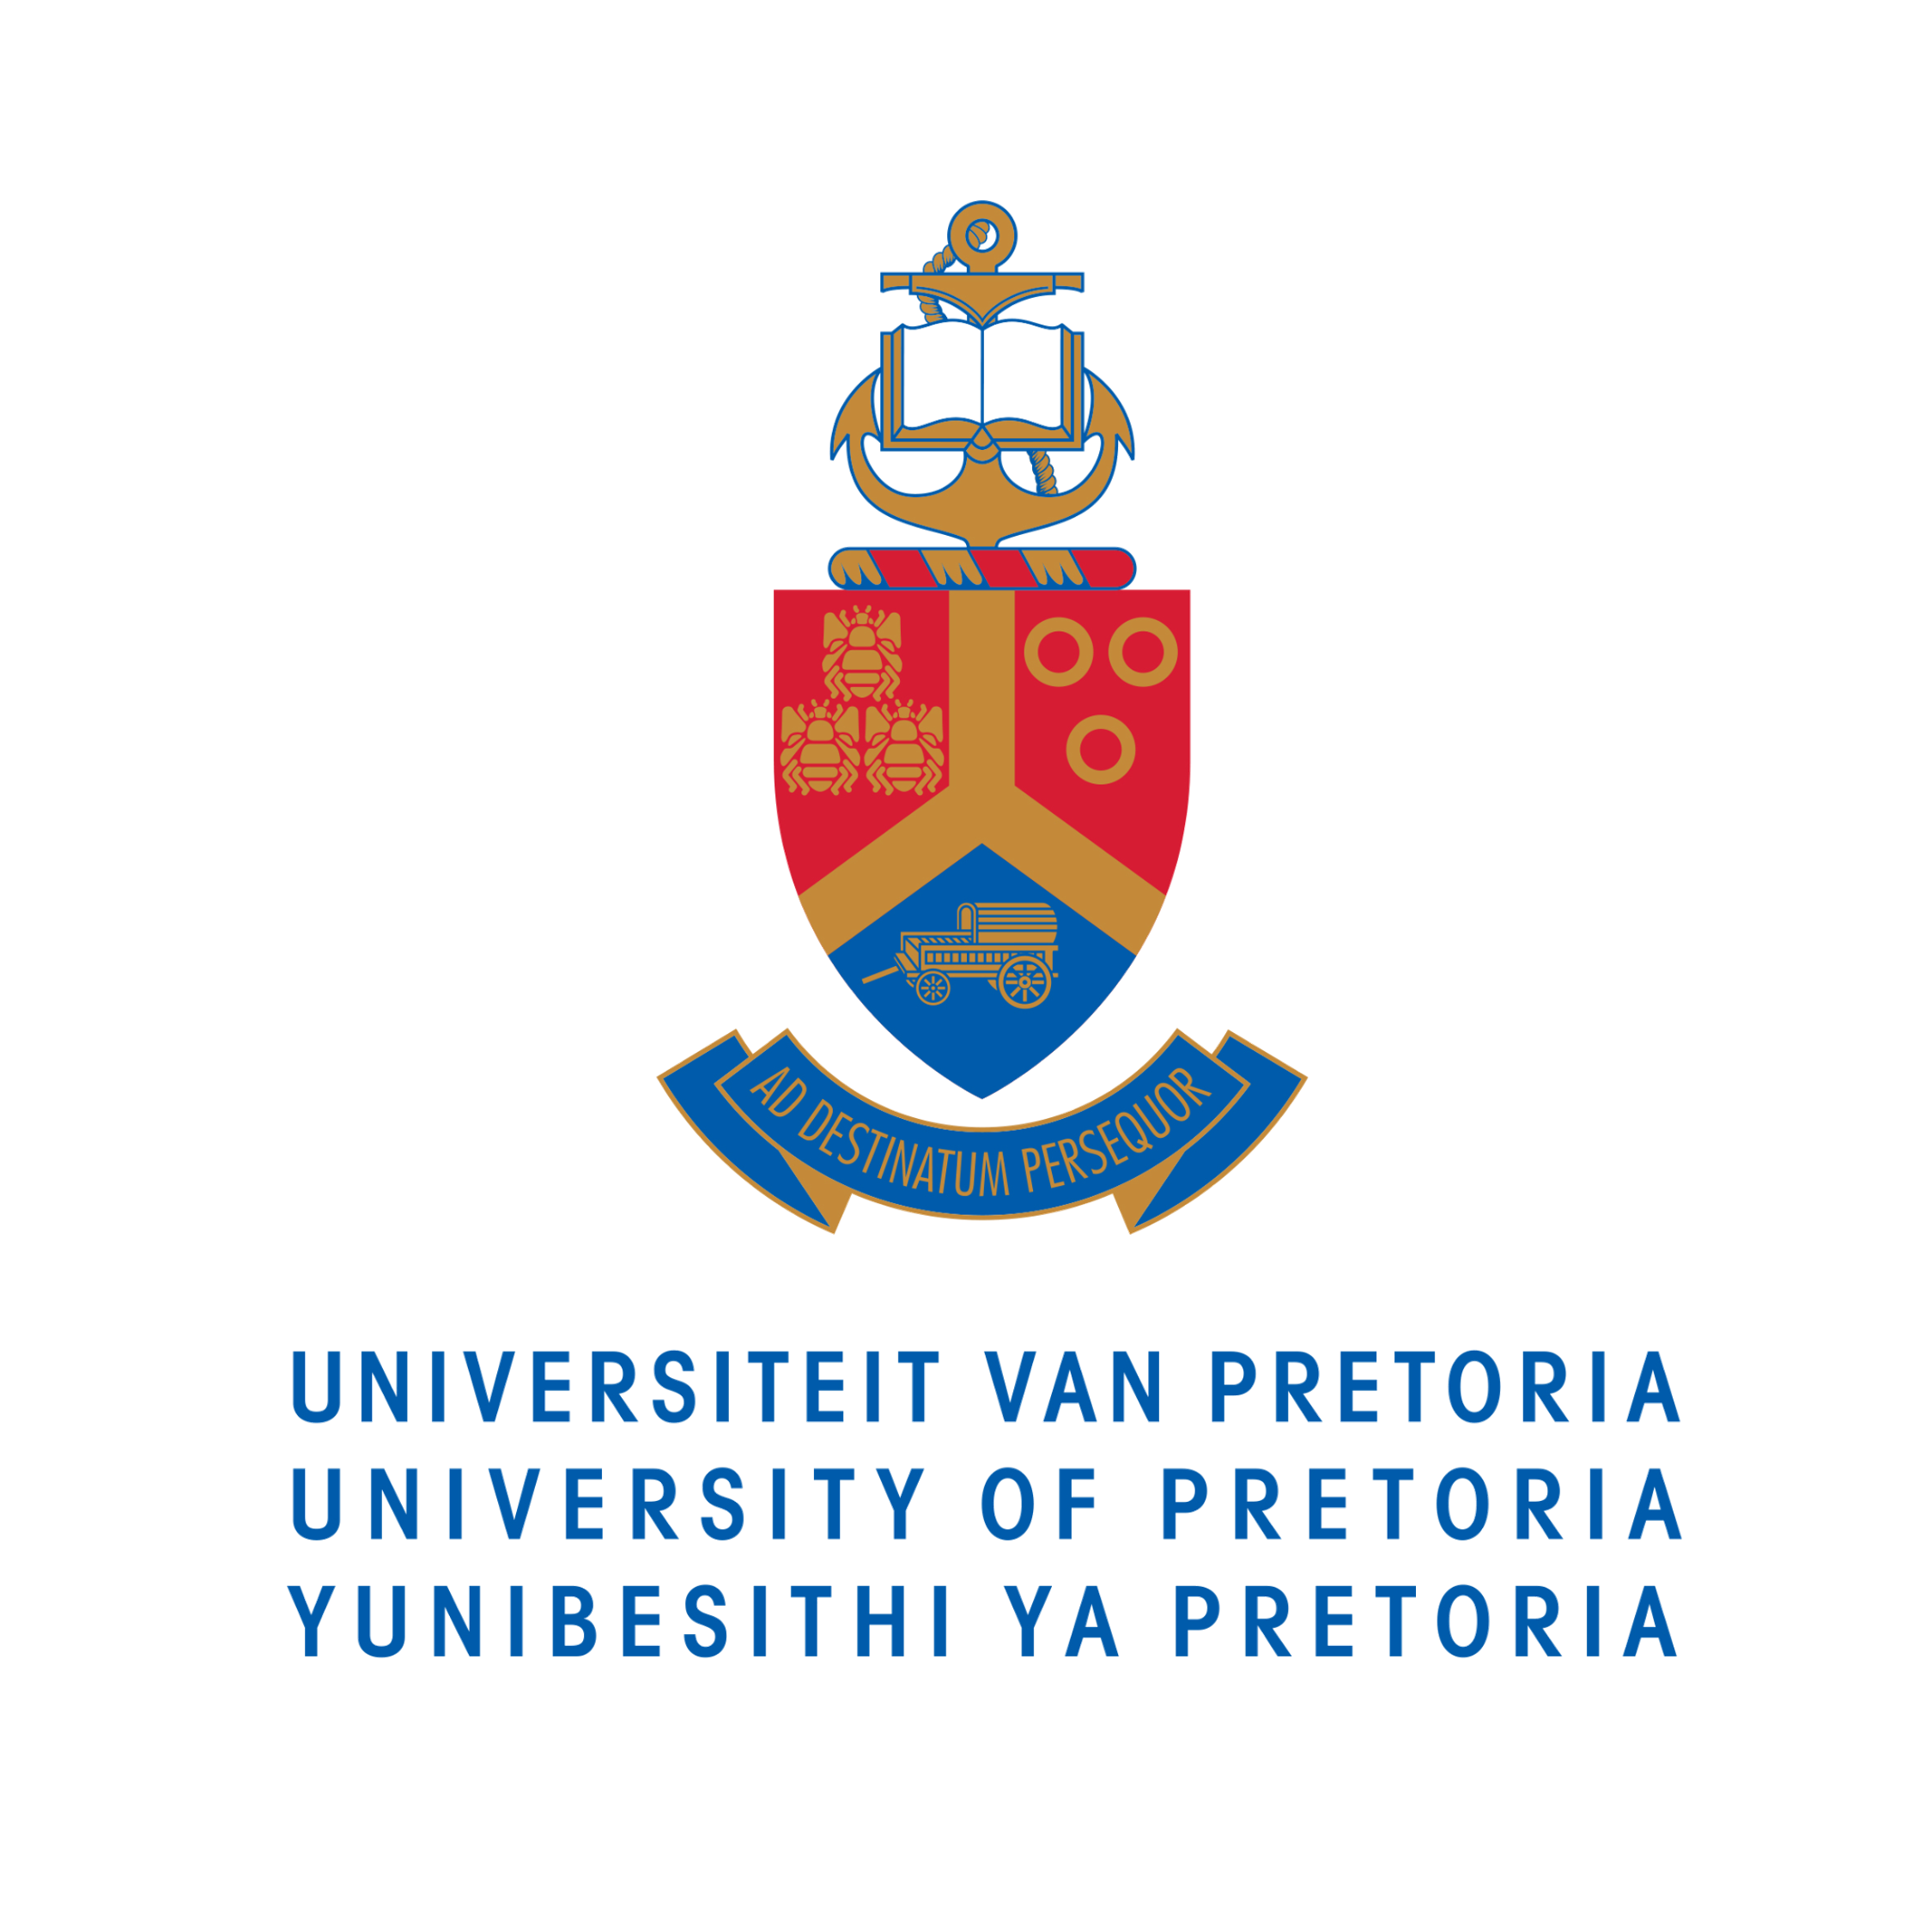 University of Pretoria Footer Logo